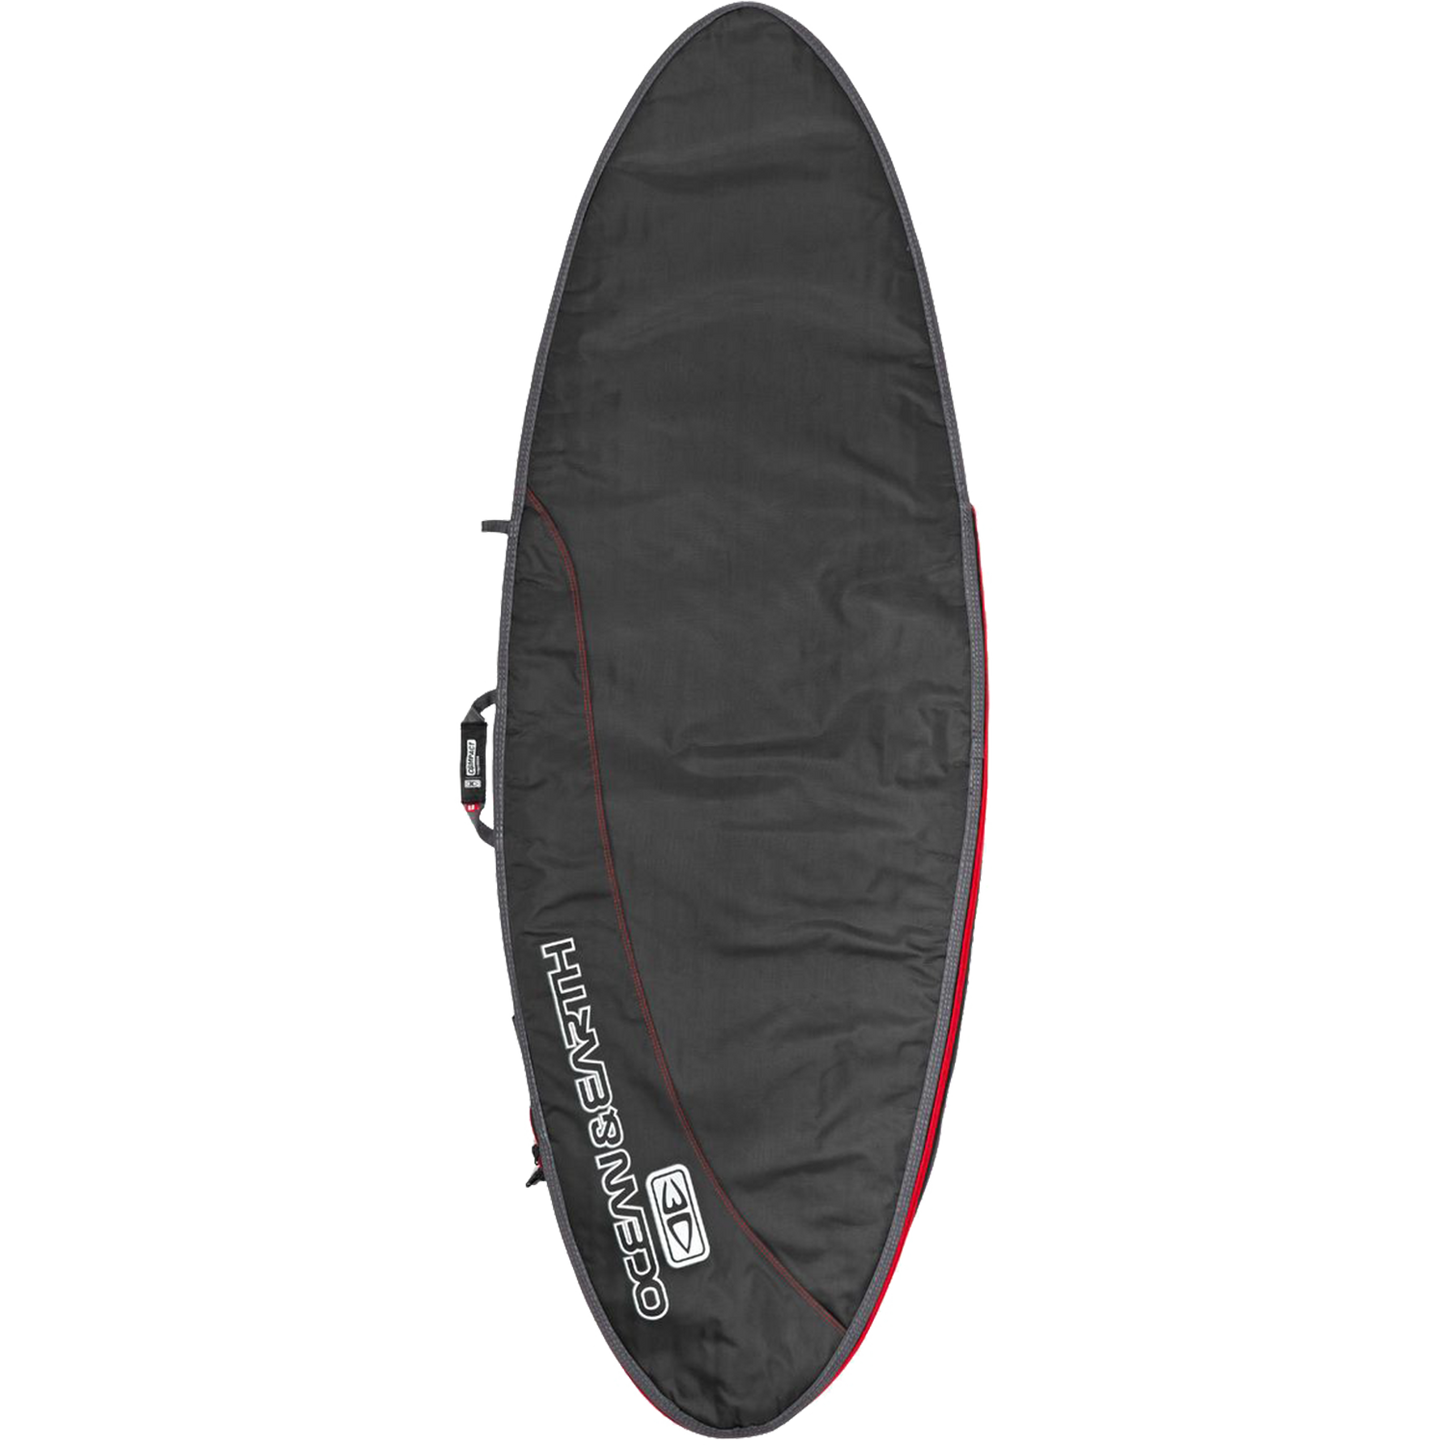 Ocean Earth XP Board Bag " Extra Protection" surfboard bag